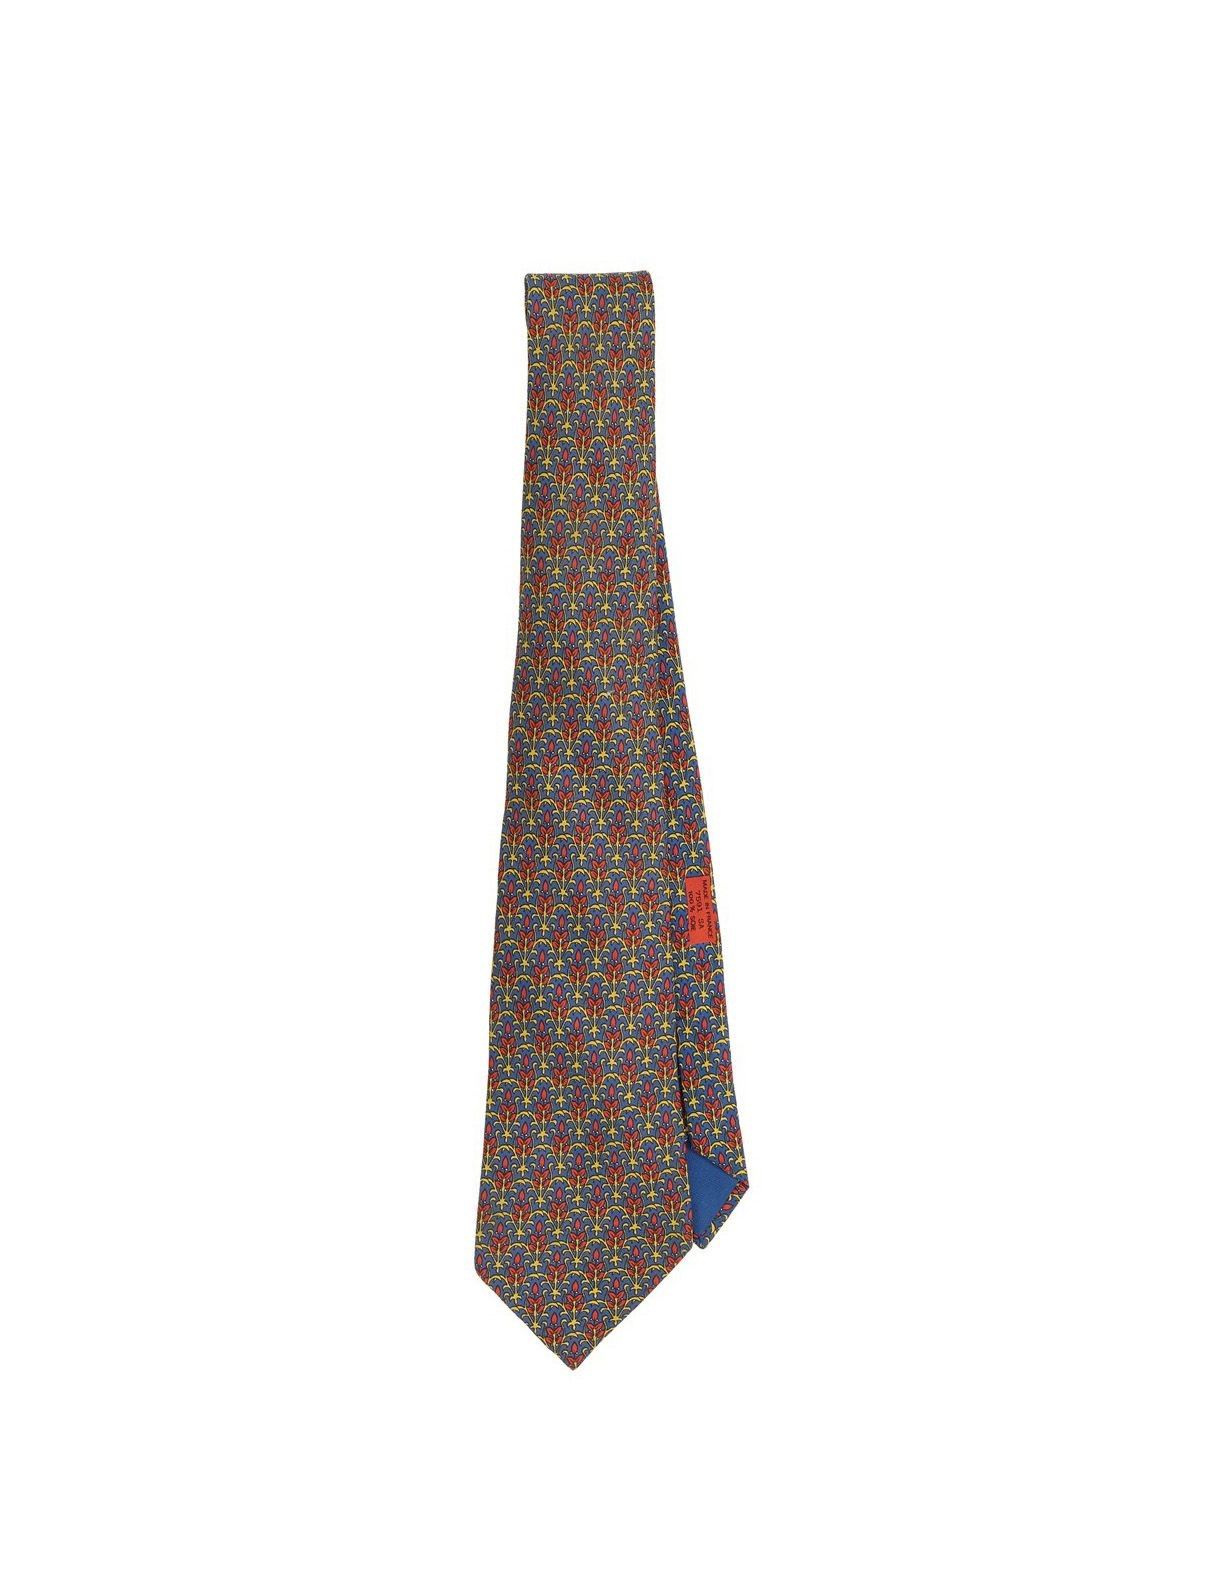 HERMES Cravatta Hermès in seta. Buone condizioni.

Hermès silk tie. Good conditi&hellip;